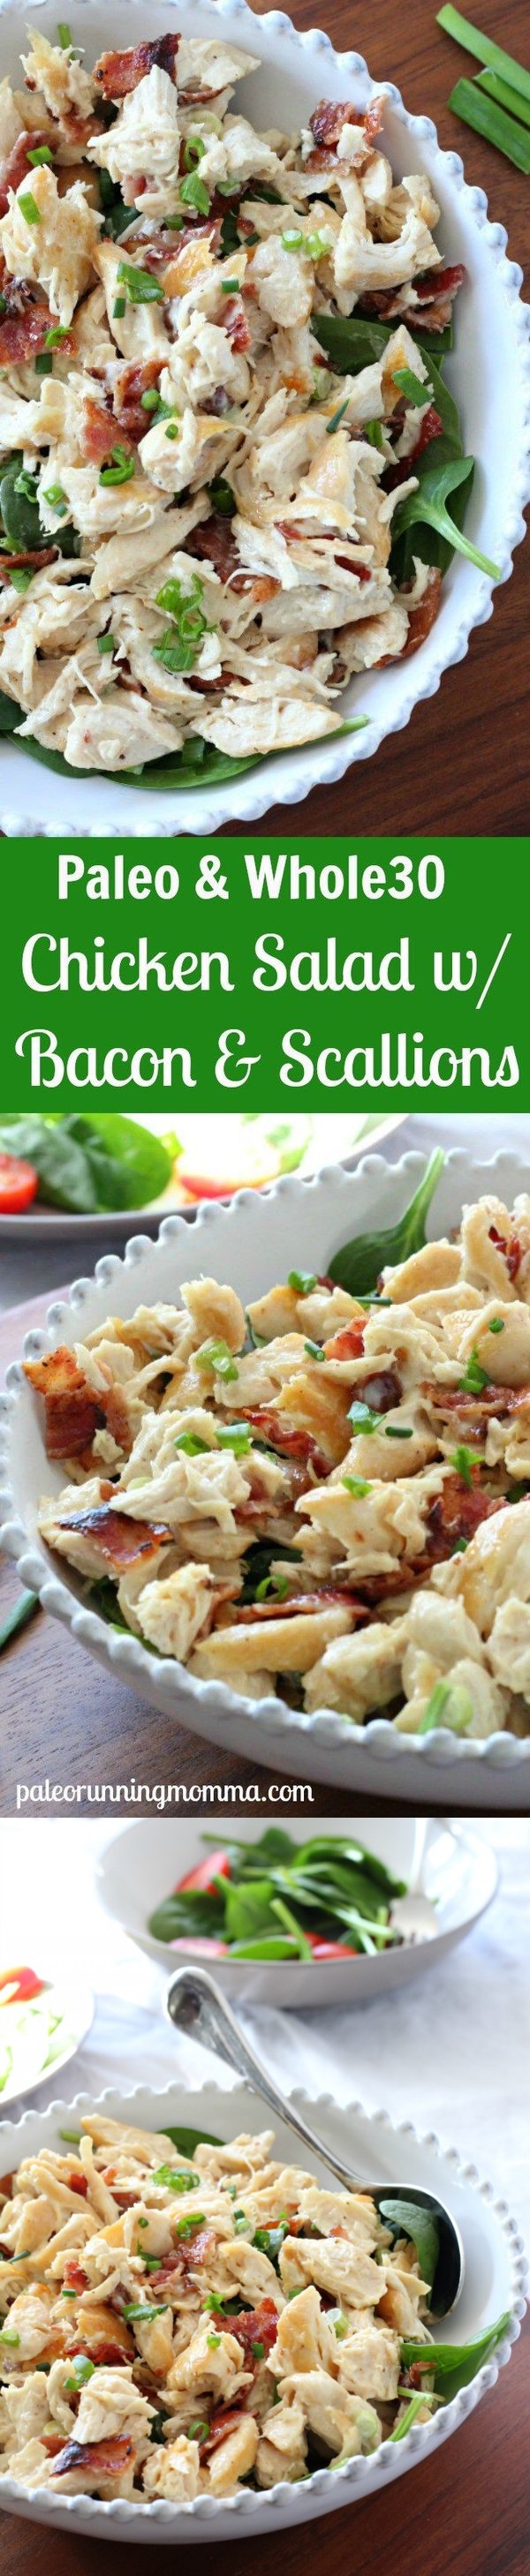 Bacon Scallion Chicken Salad